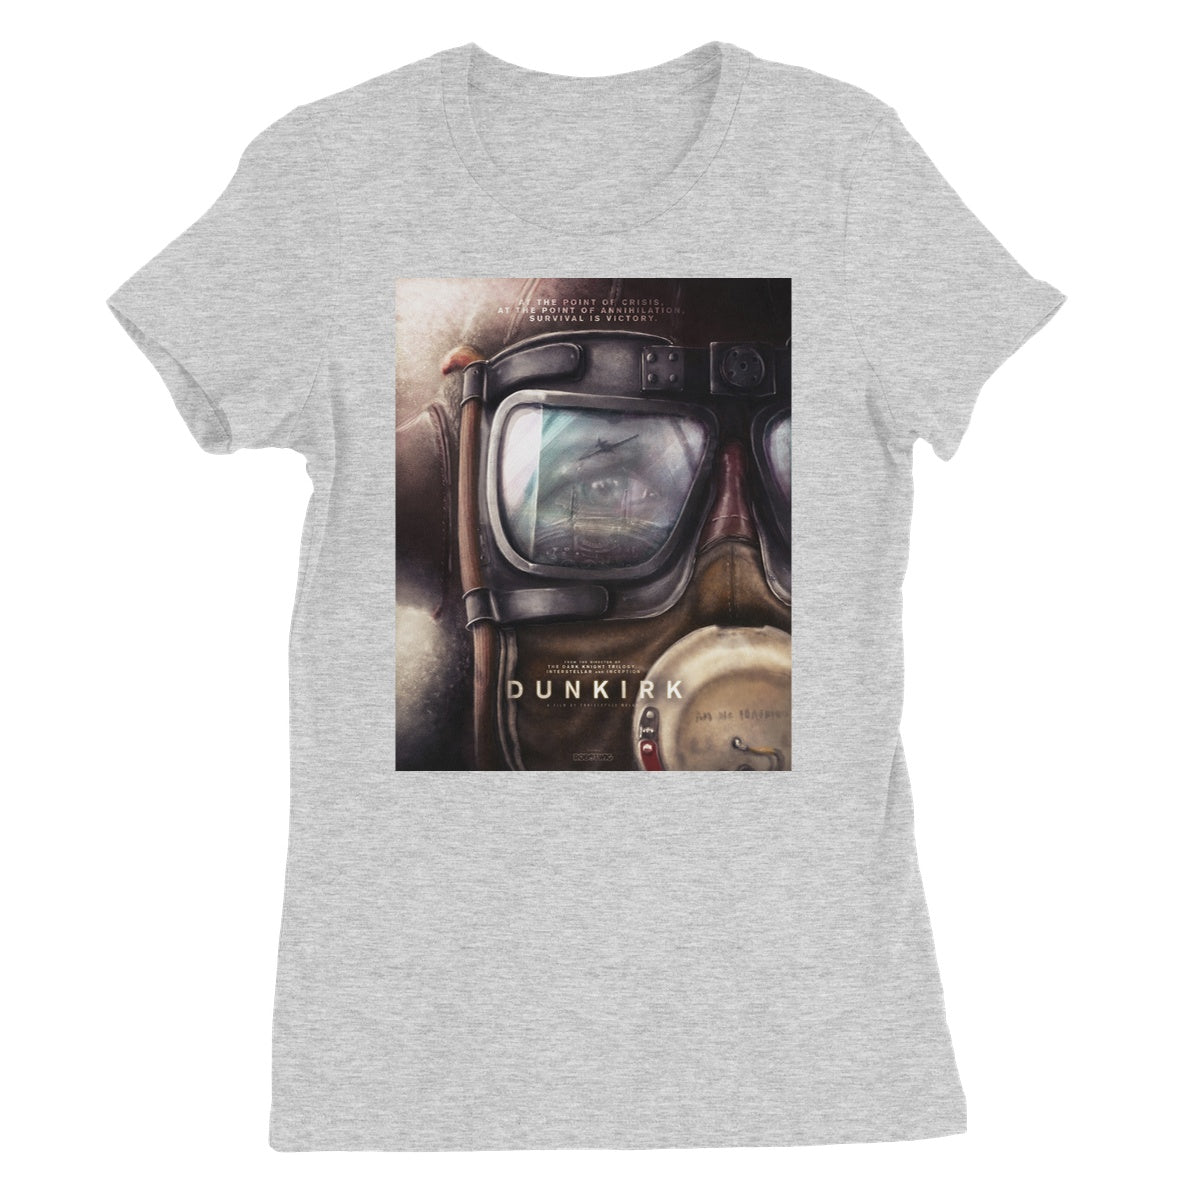 Dunkirk Illustrated Tee Women's Favourite T-Shirt